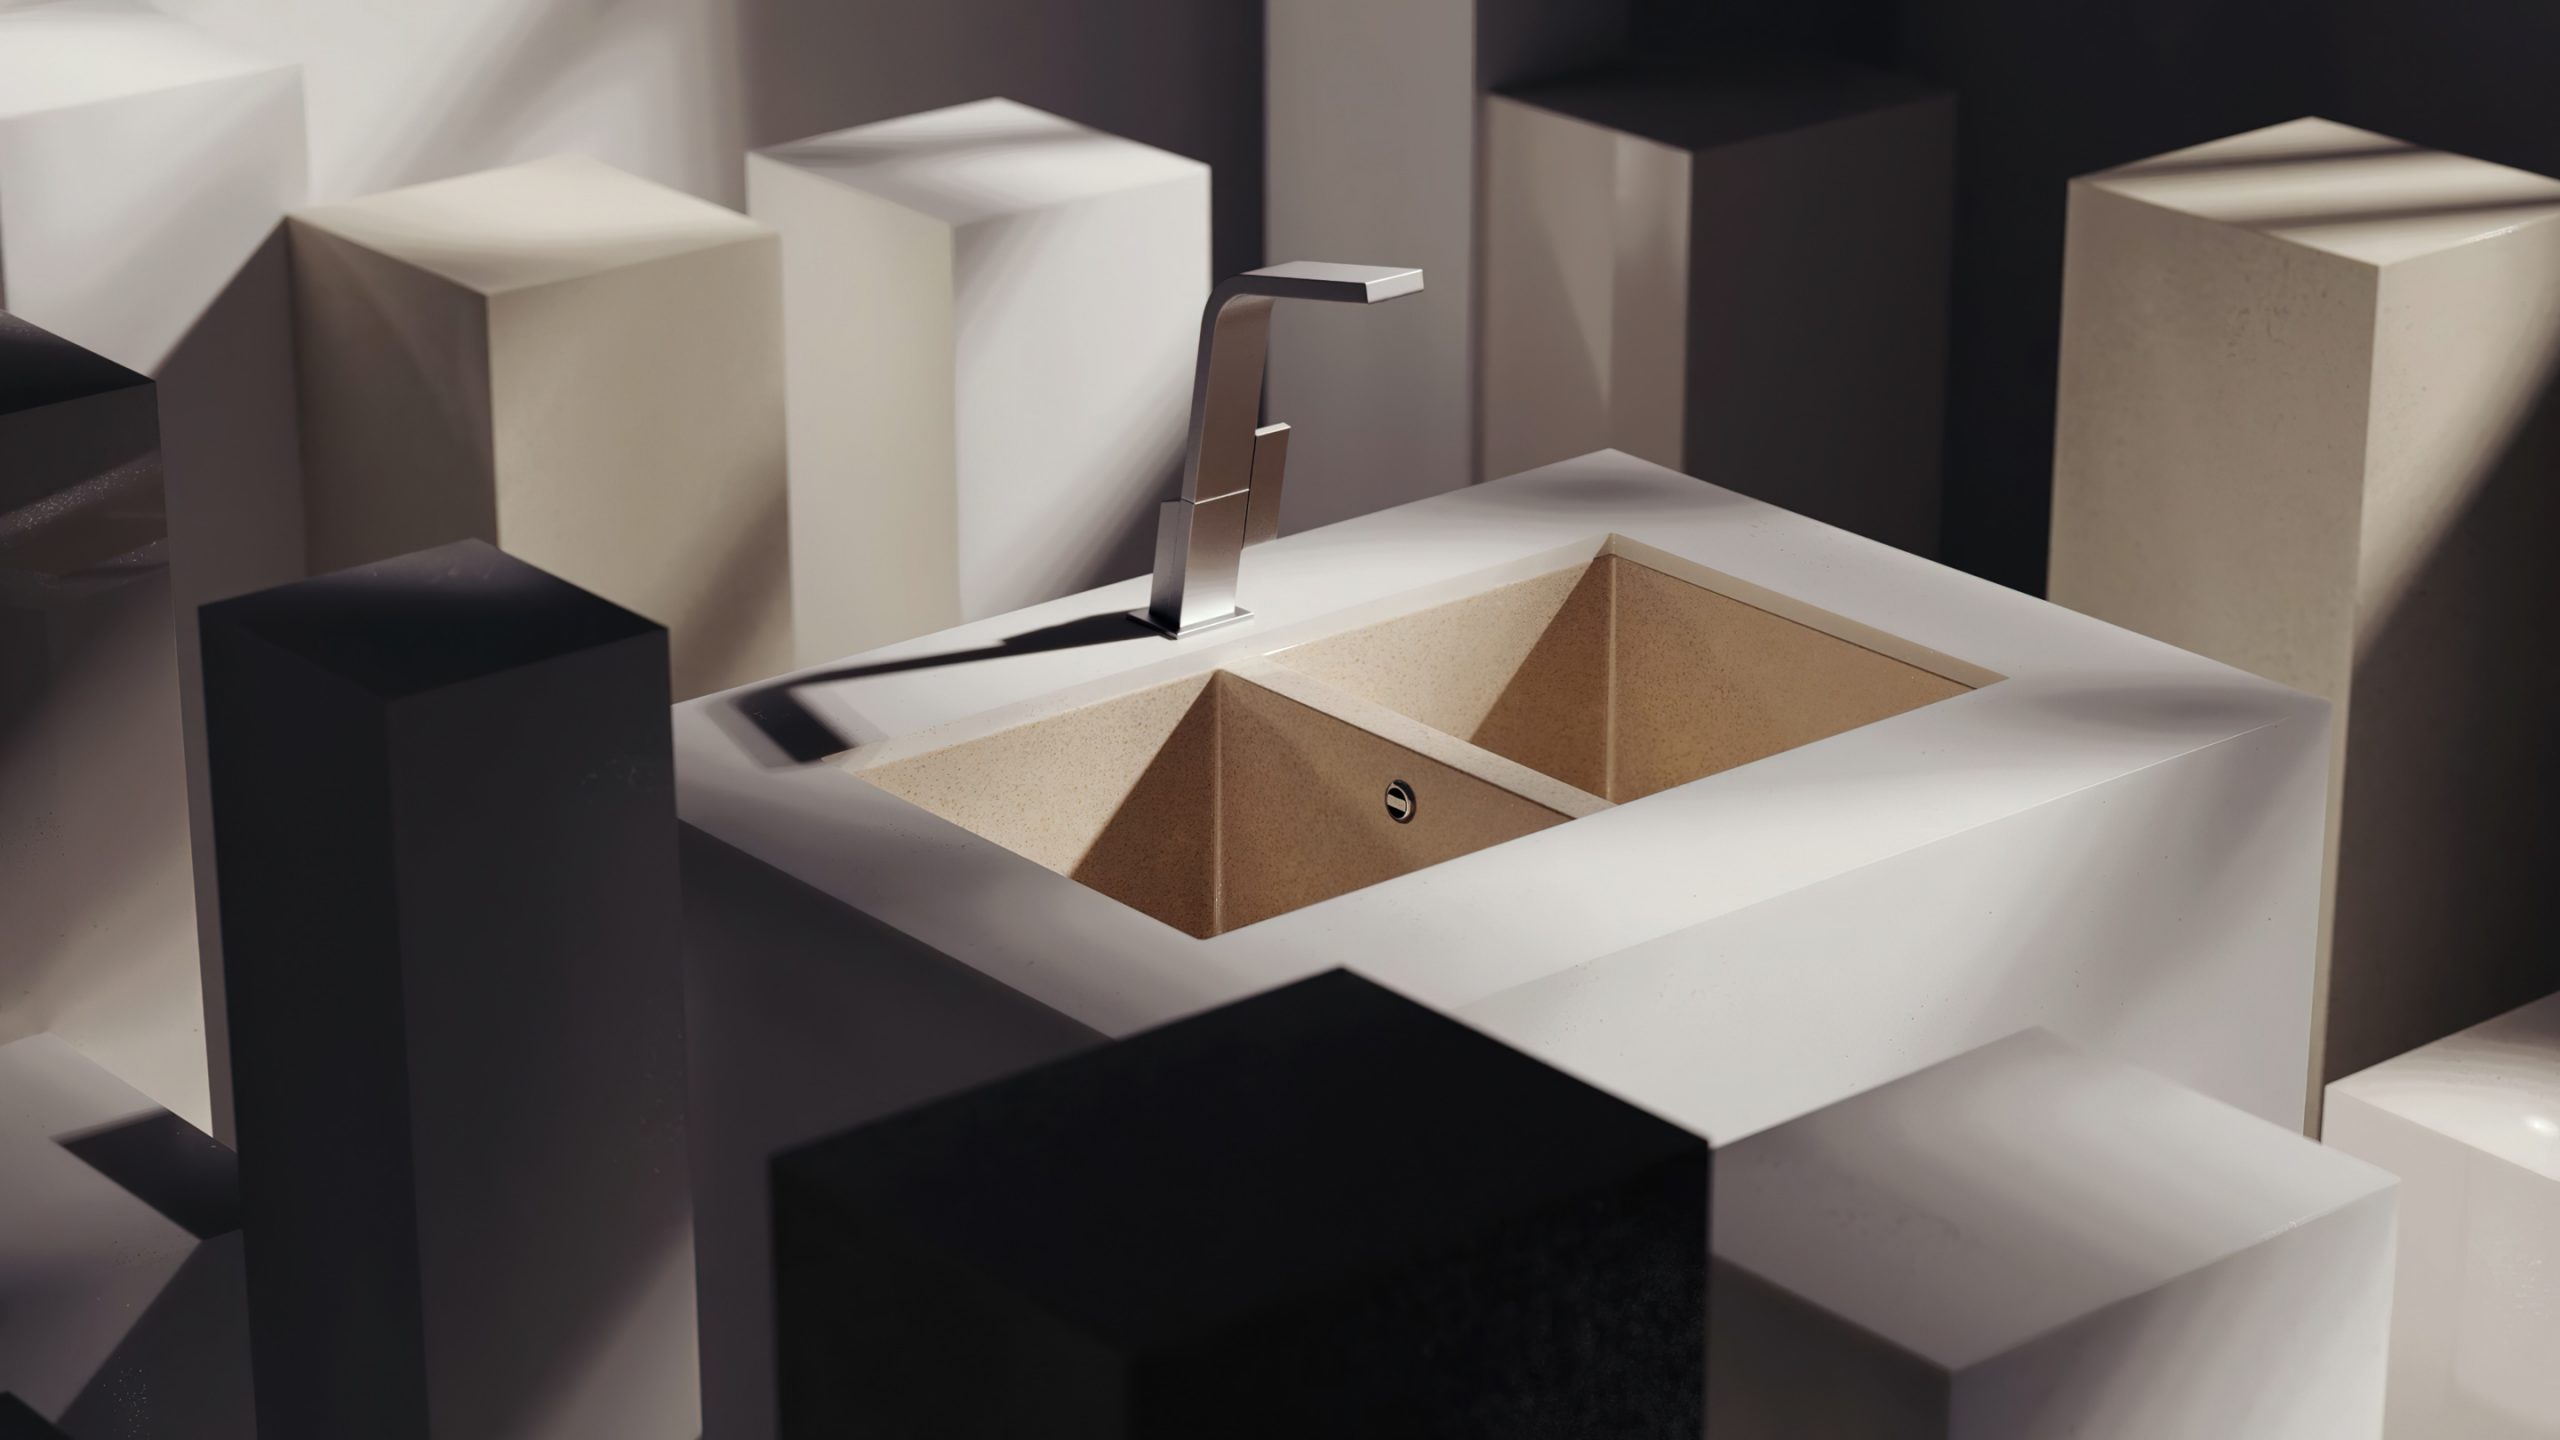 3D video for the new TEKA sink (Tegranite) created by Kutuko Studio.